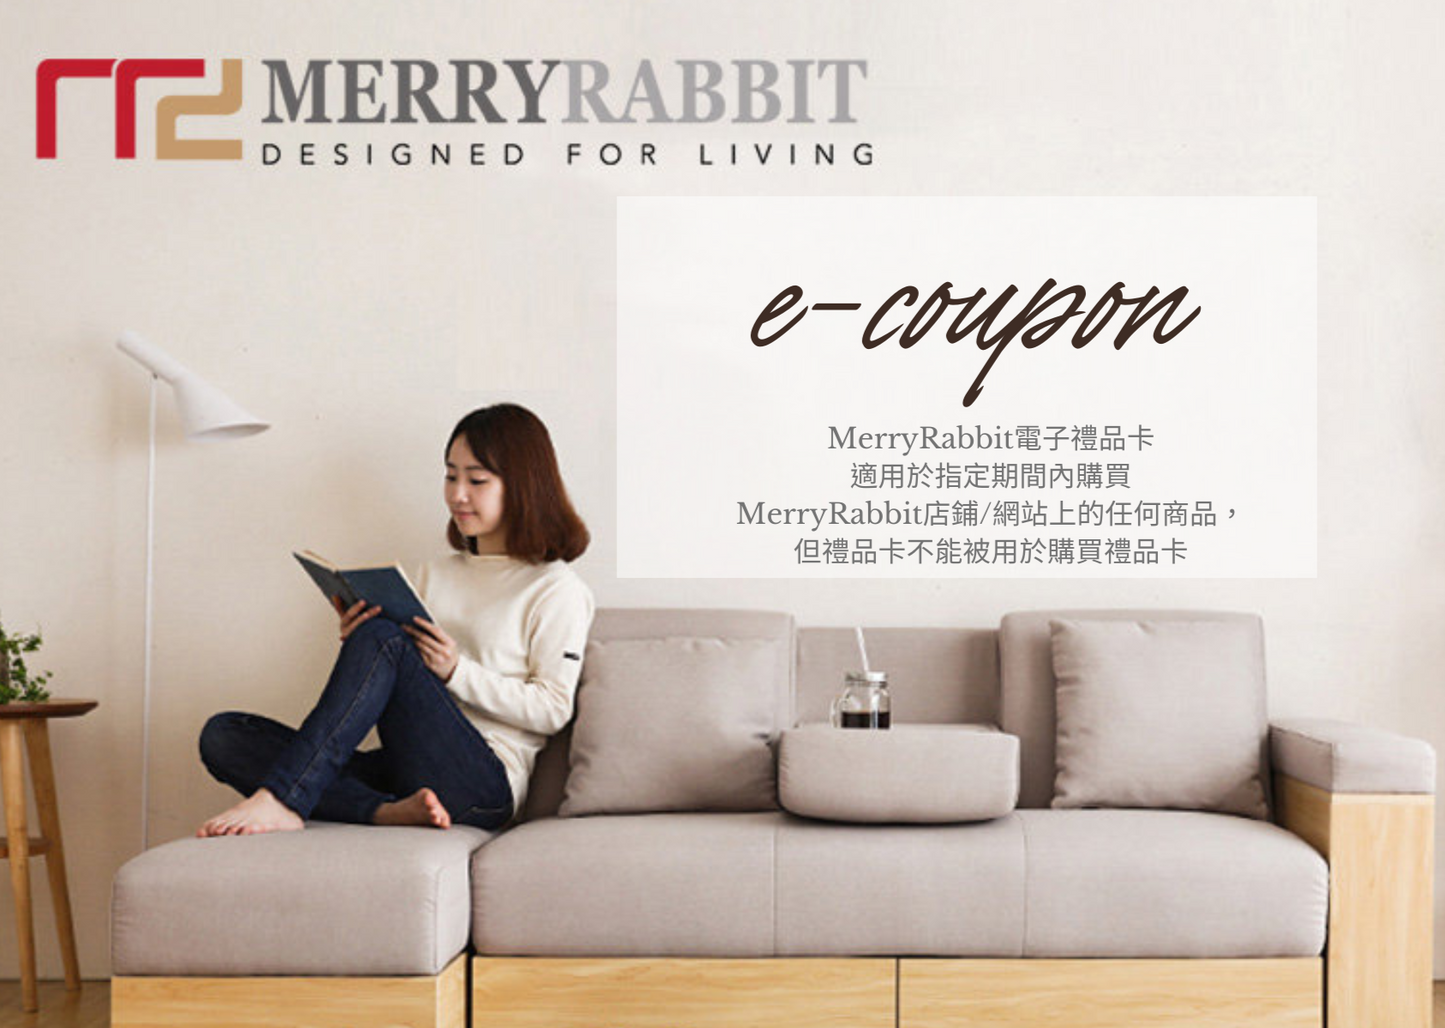 MerryRabbit 禮物卡(test)https://merryrabbit.myshopify.com/admin/products?gift_card=true&selectedView=all